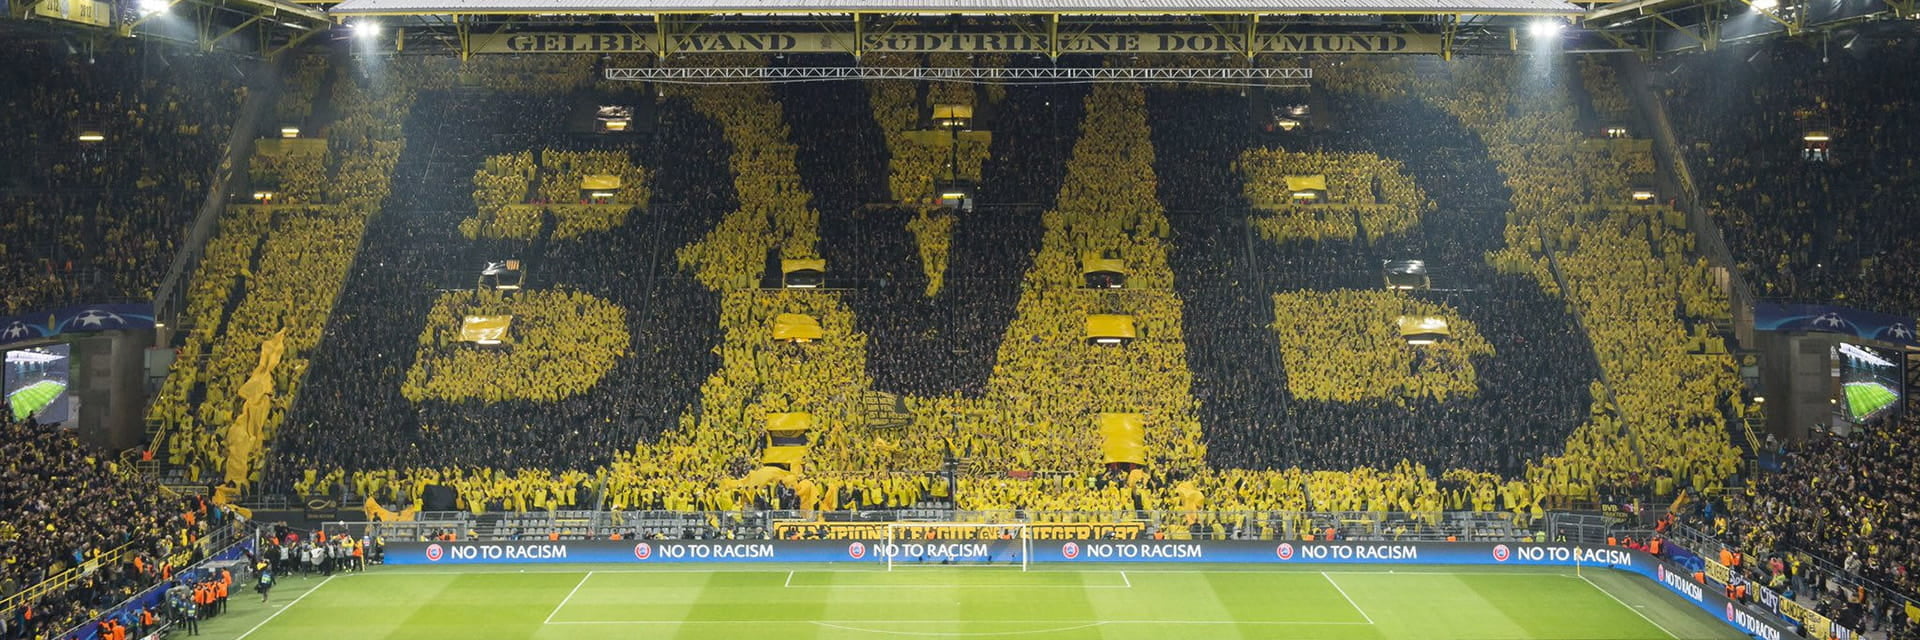 Borussia Dortmund - VfL Bochum, 6 Novemberum 15:30